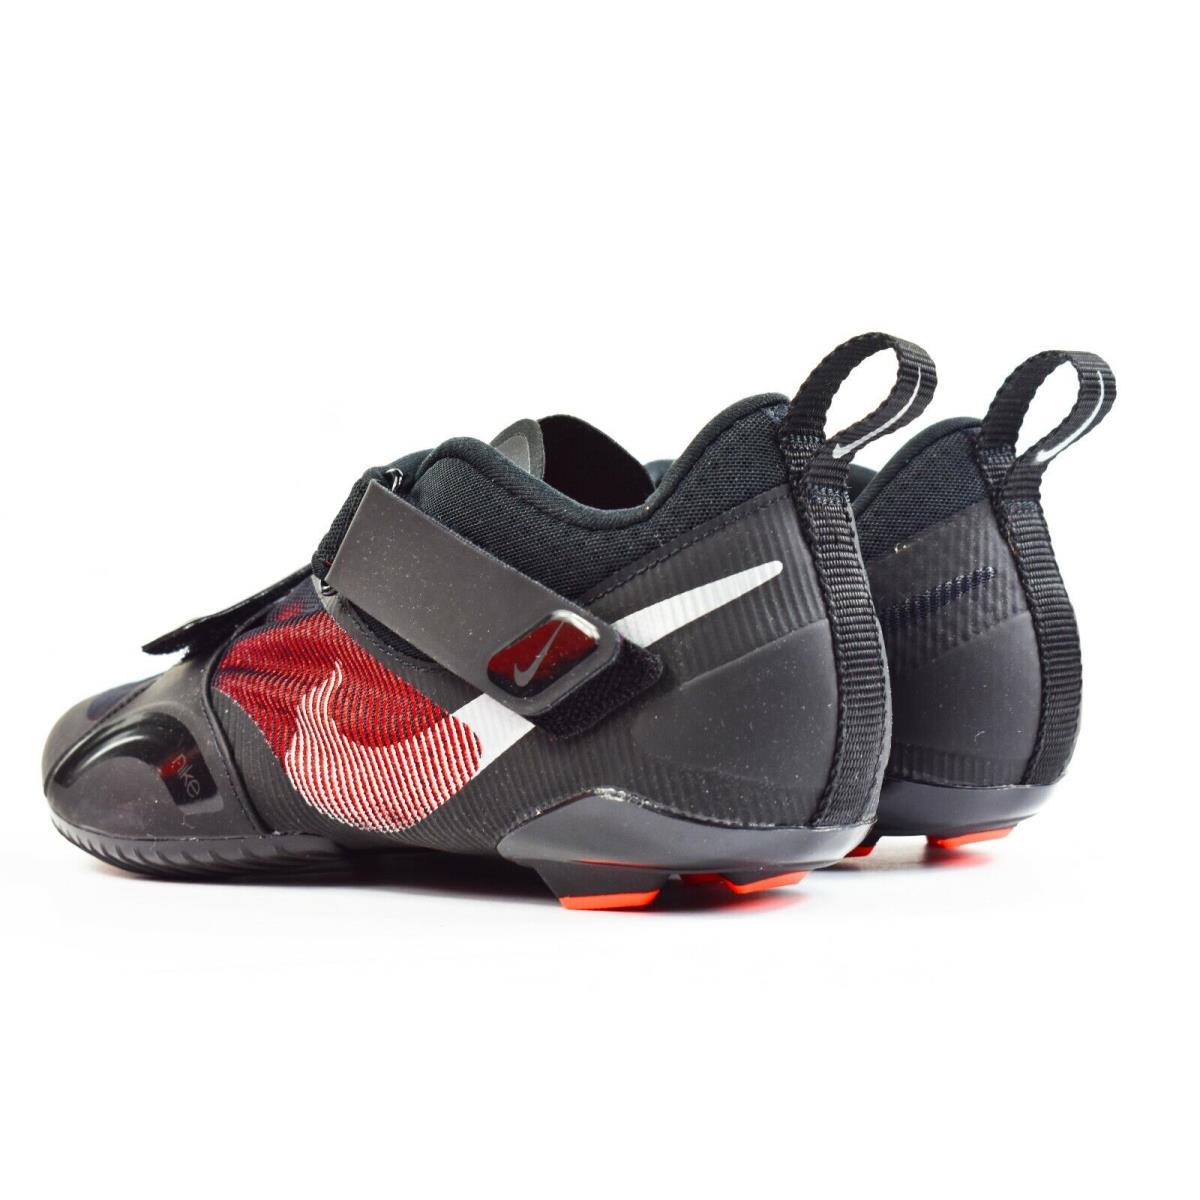 Nike shoes Superrep Cycle - Black 2